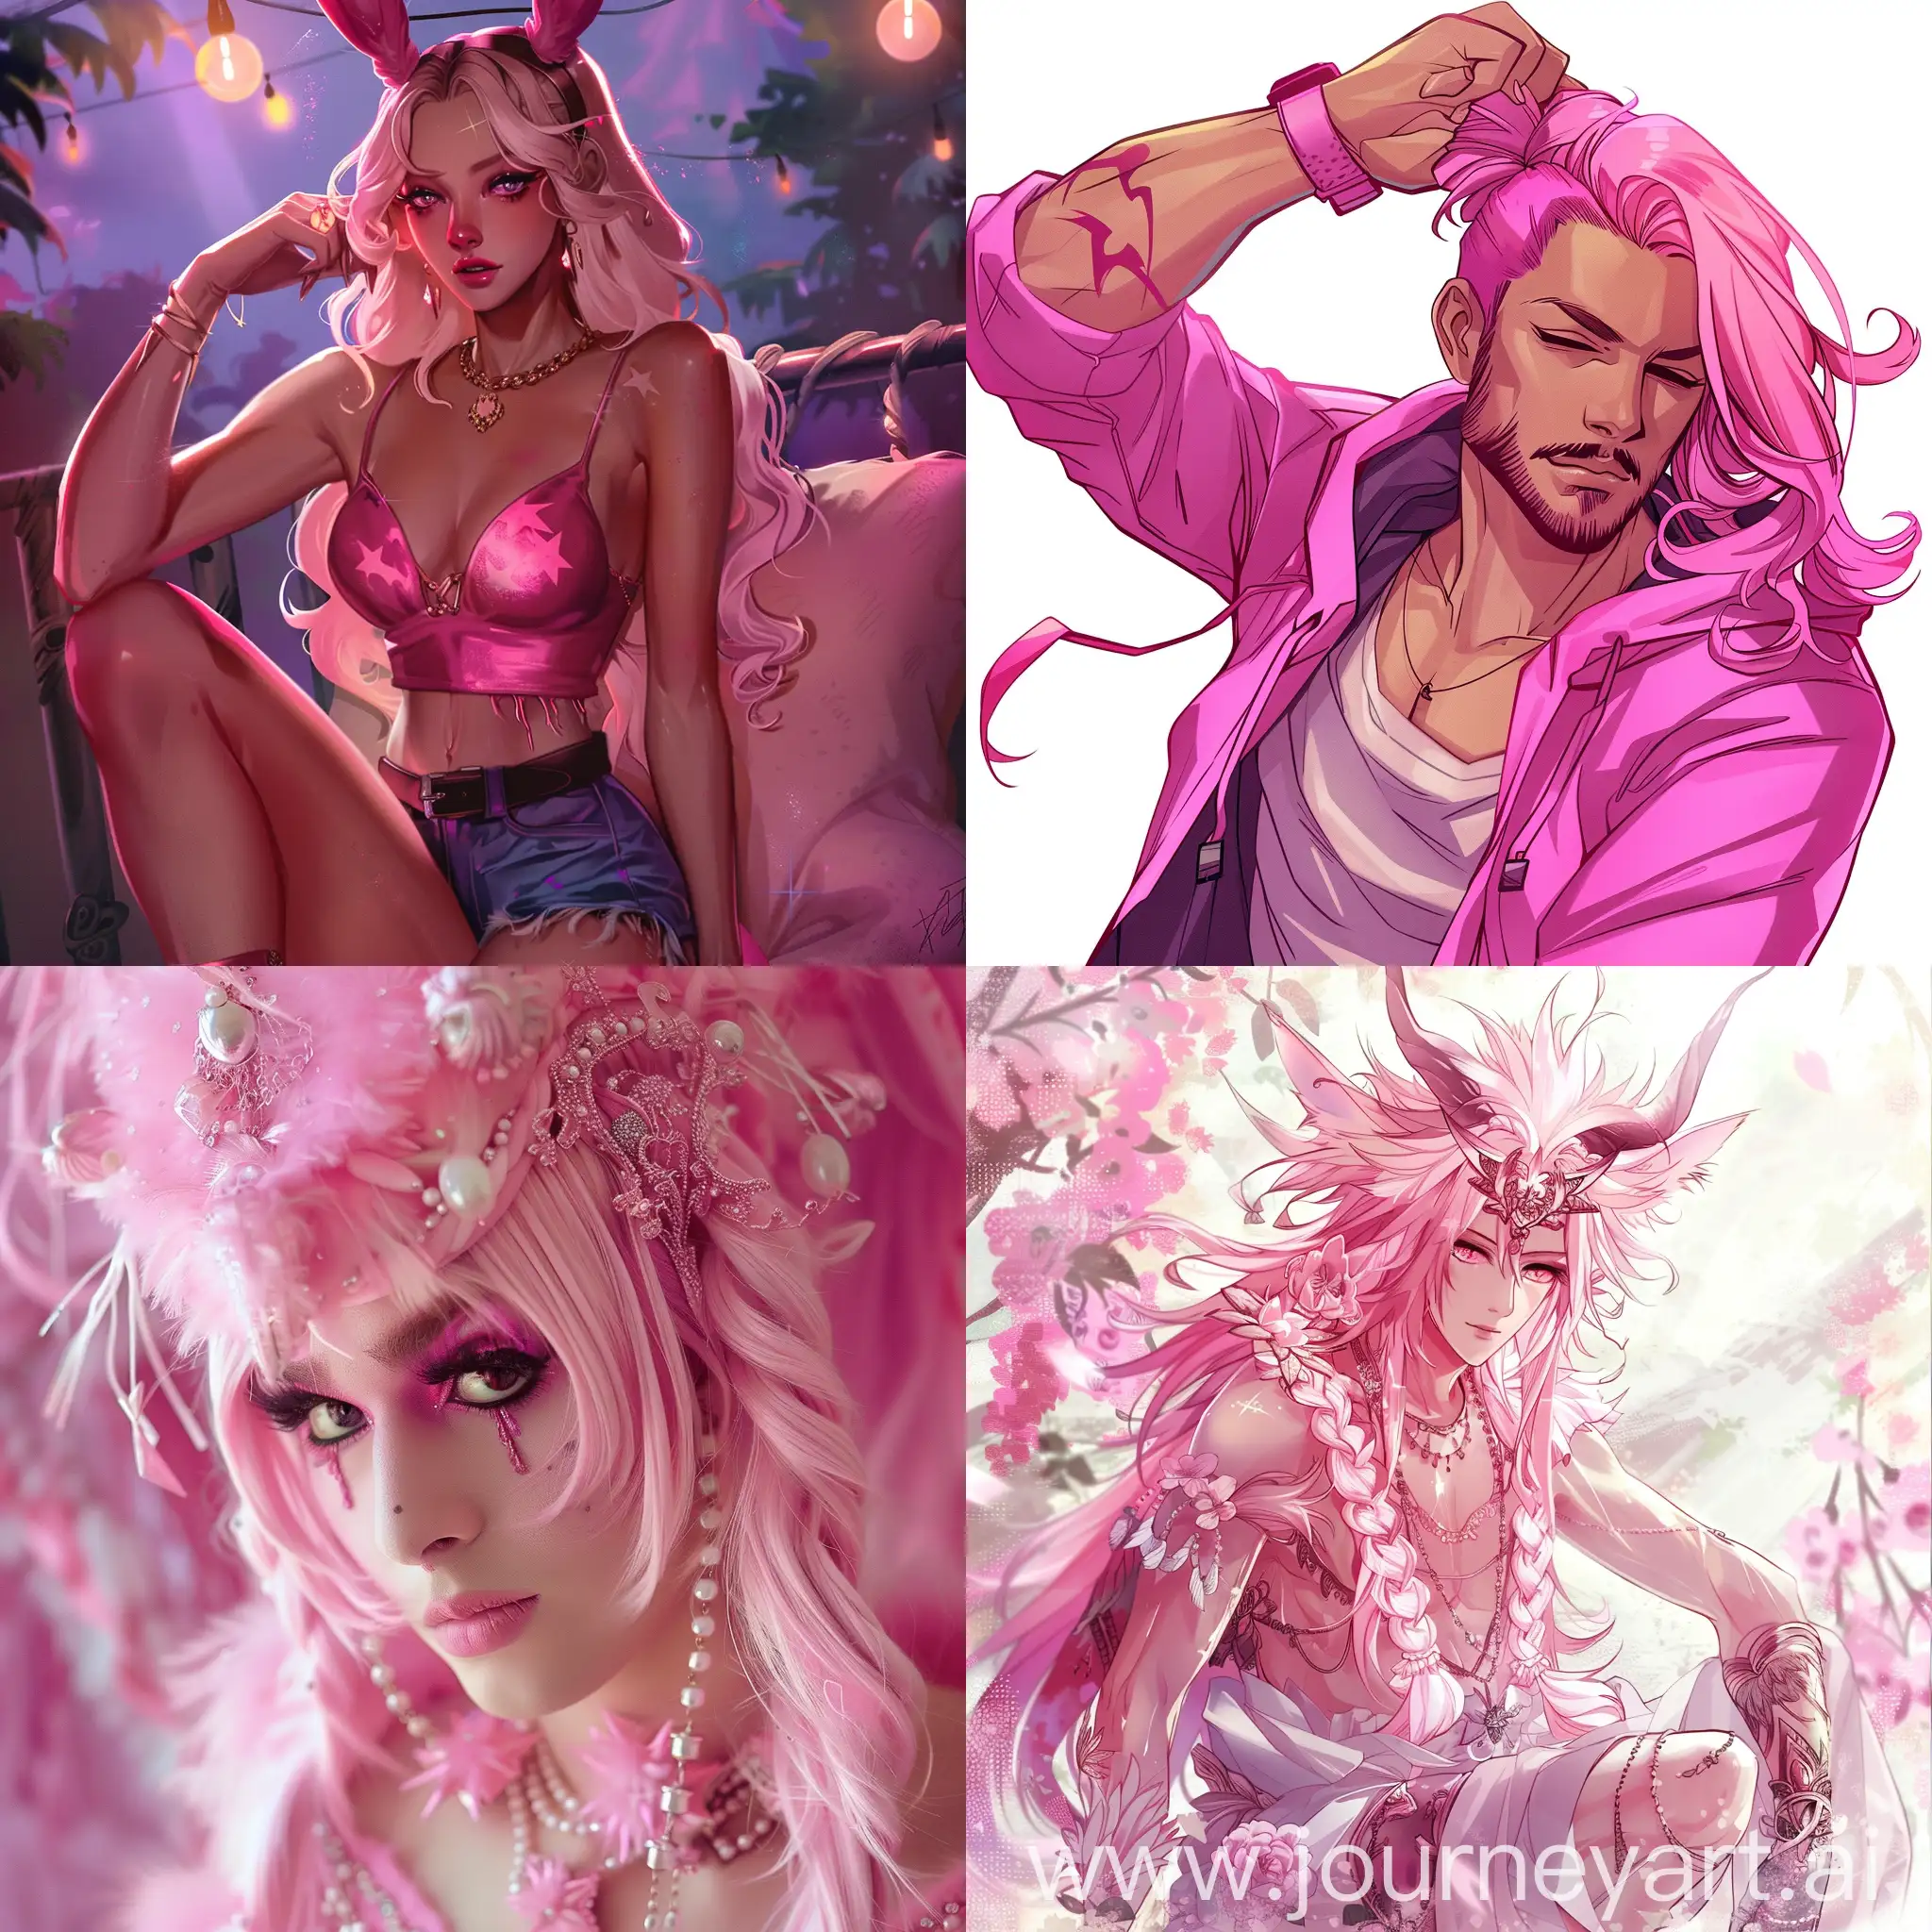 Elegant-Male-Temptress-in-Pink-Seduces-Viewer